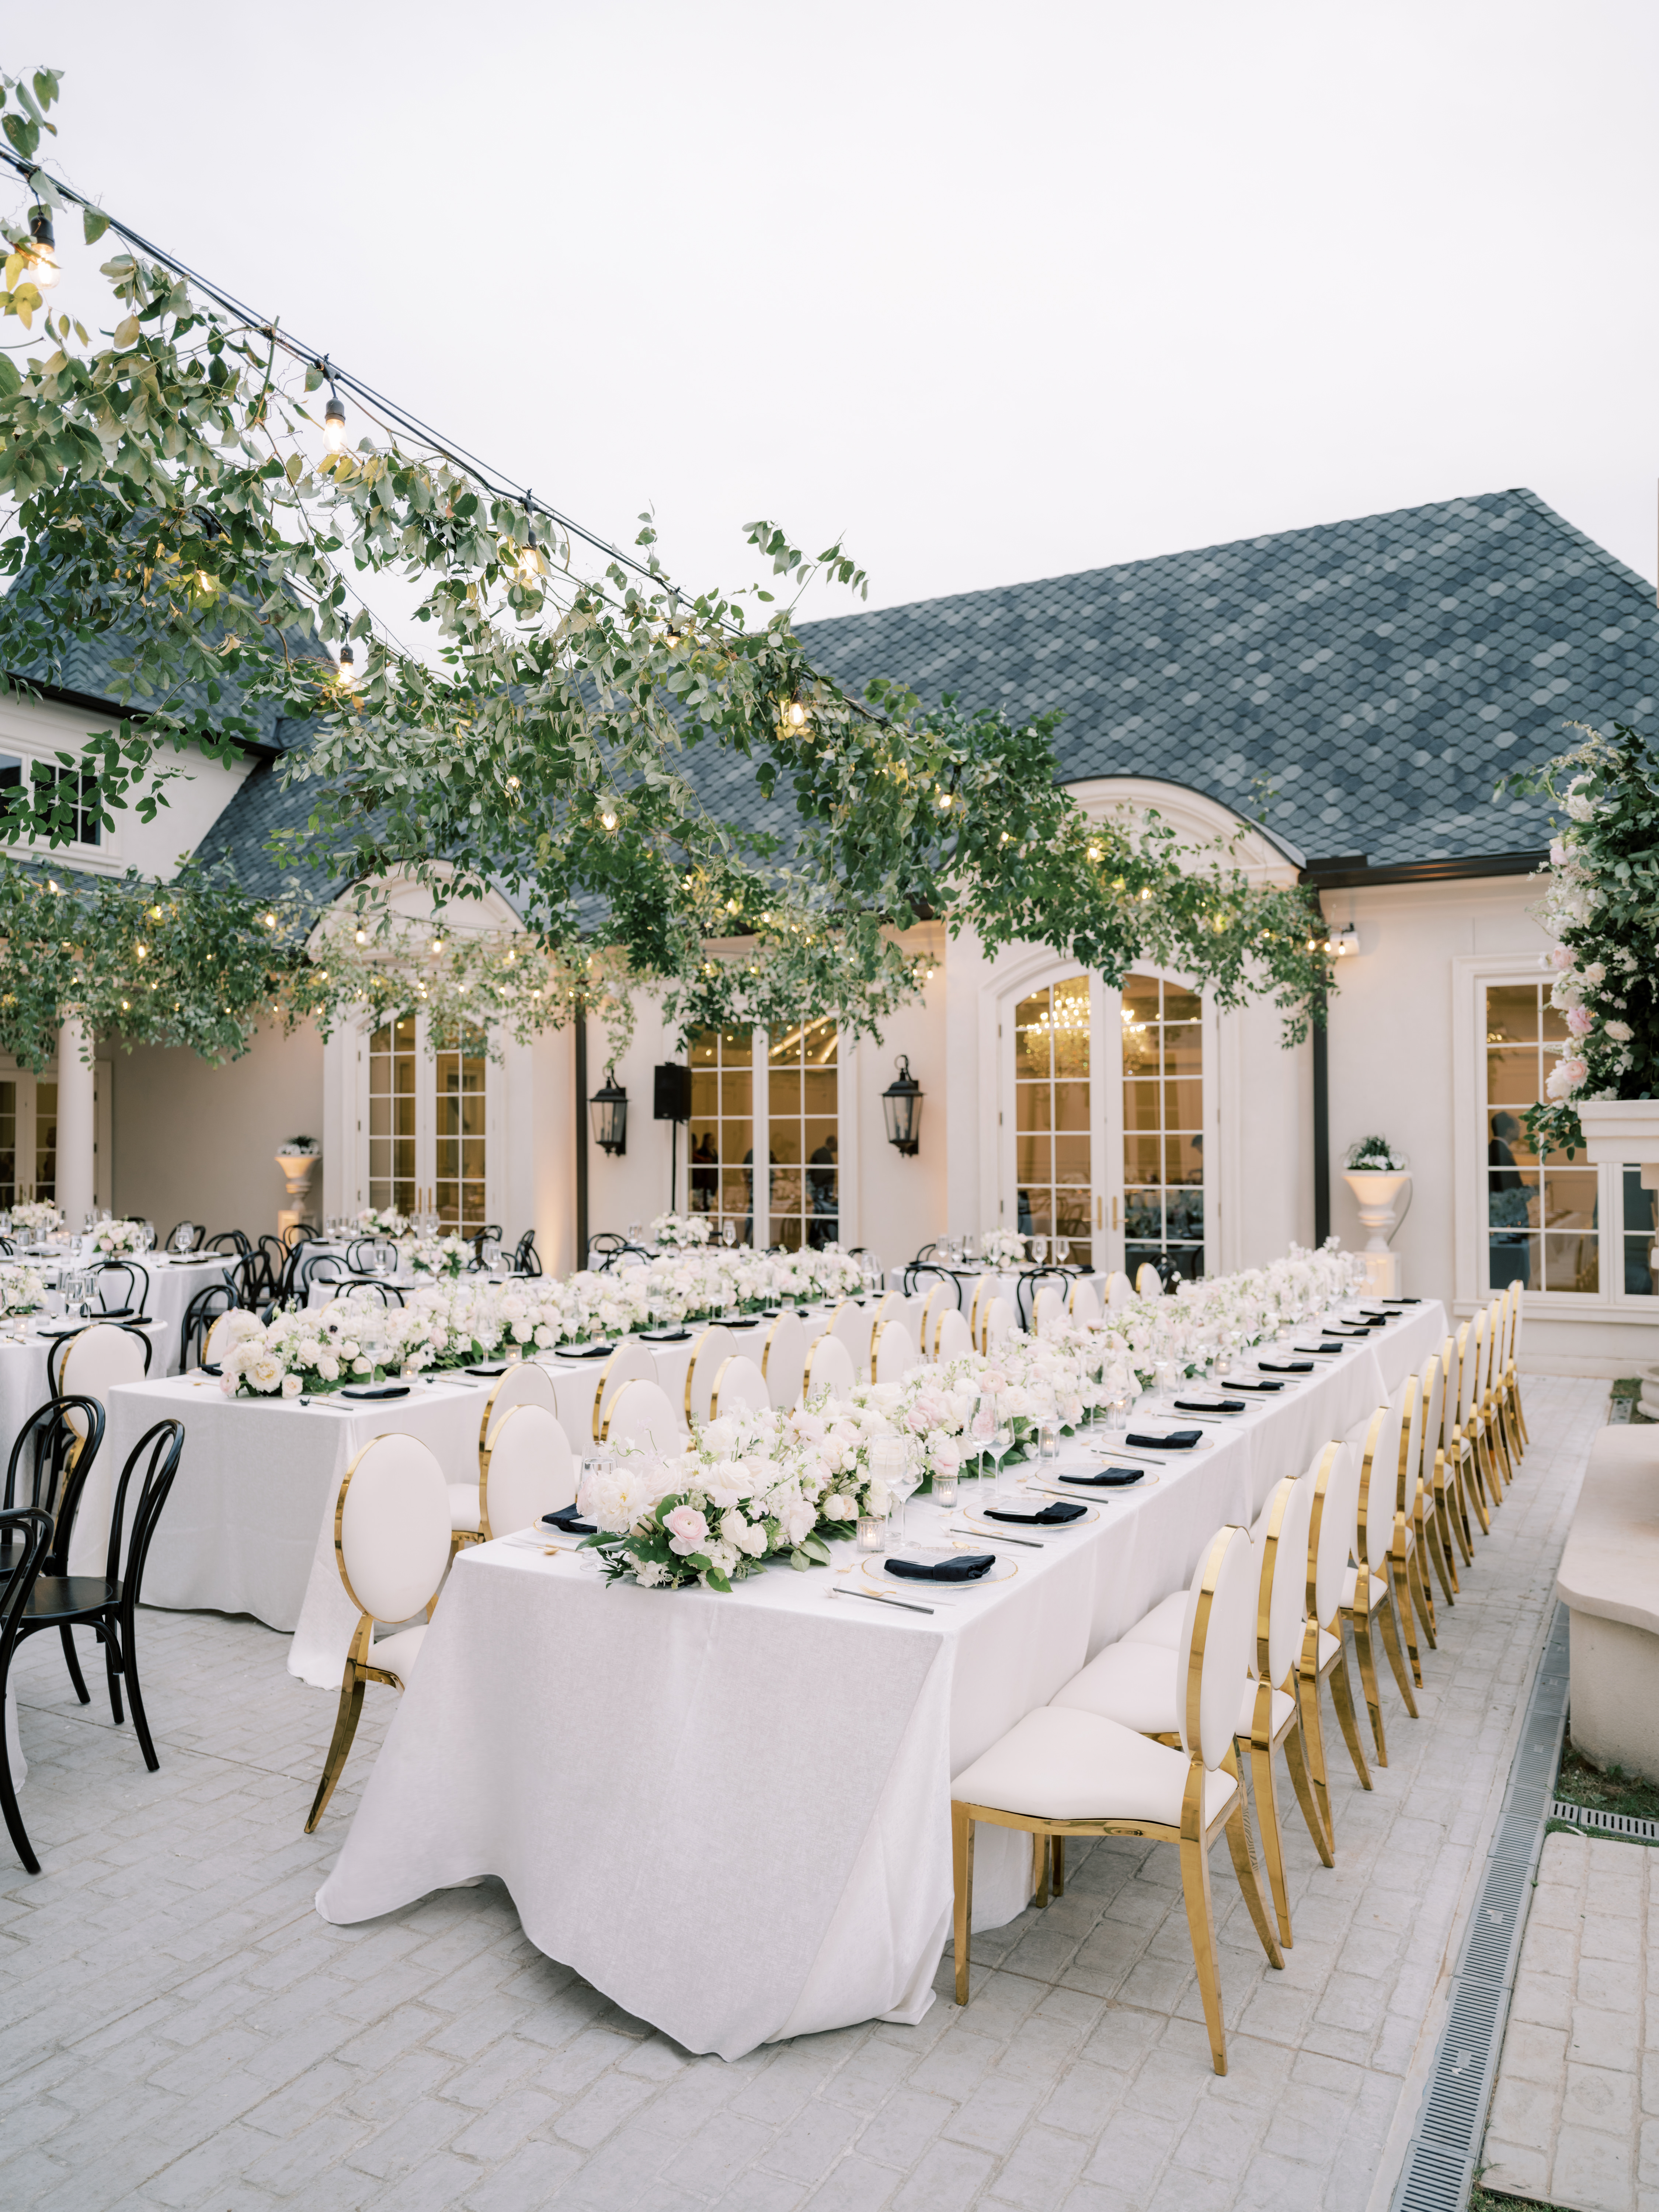 blogger Hoang-Kim Cung's outdoor wedding reception at the hillside estate